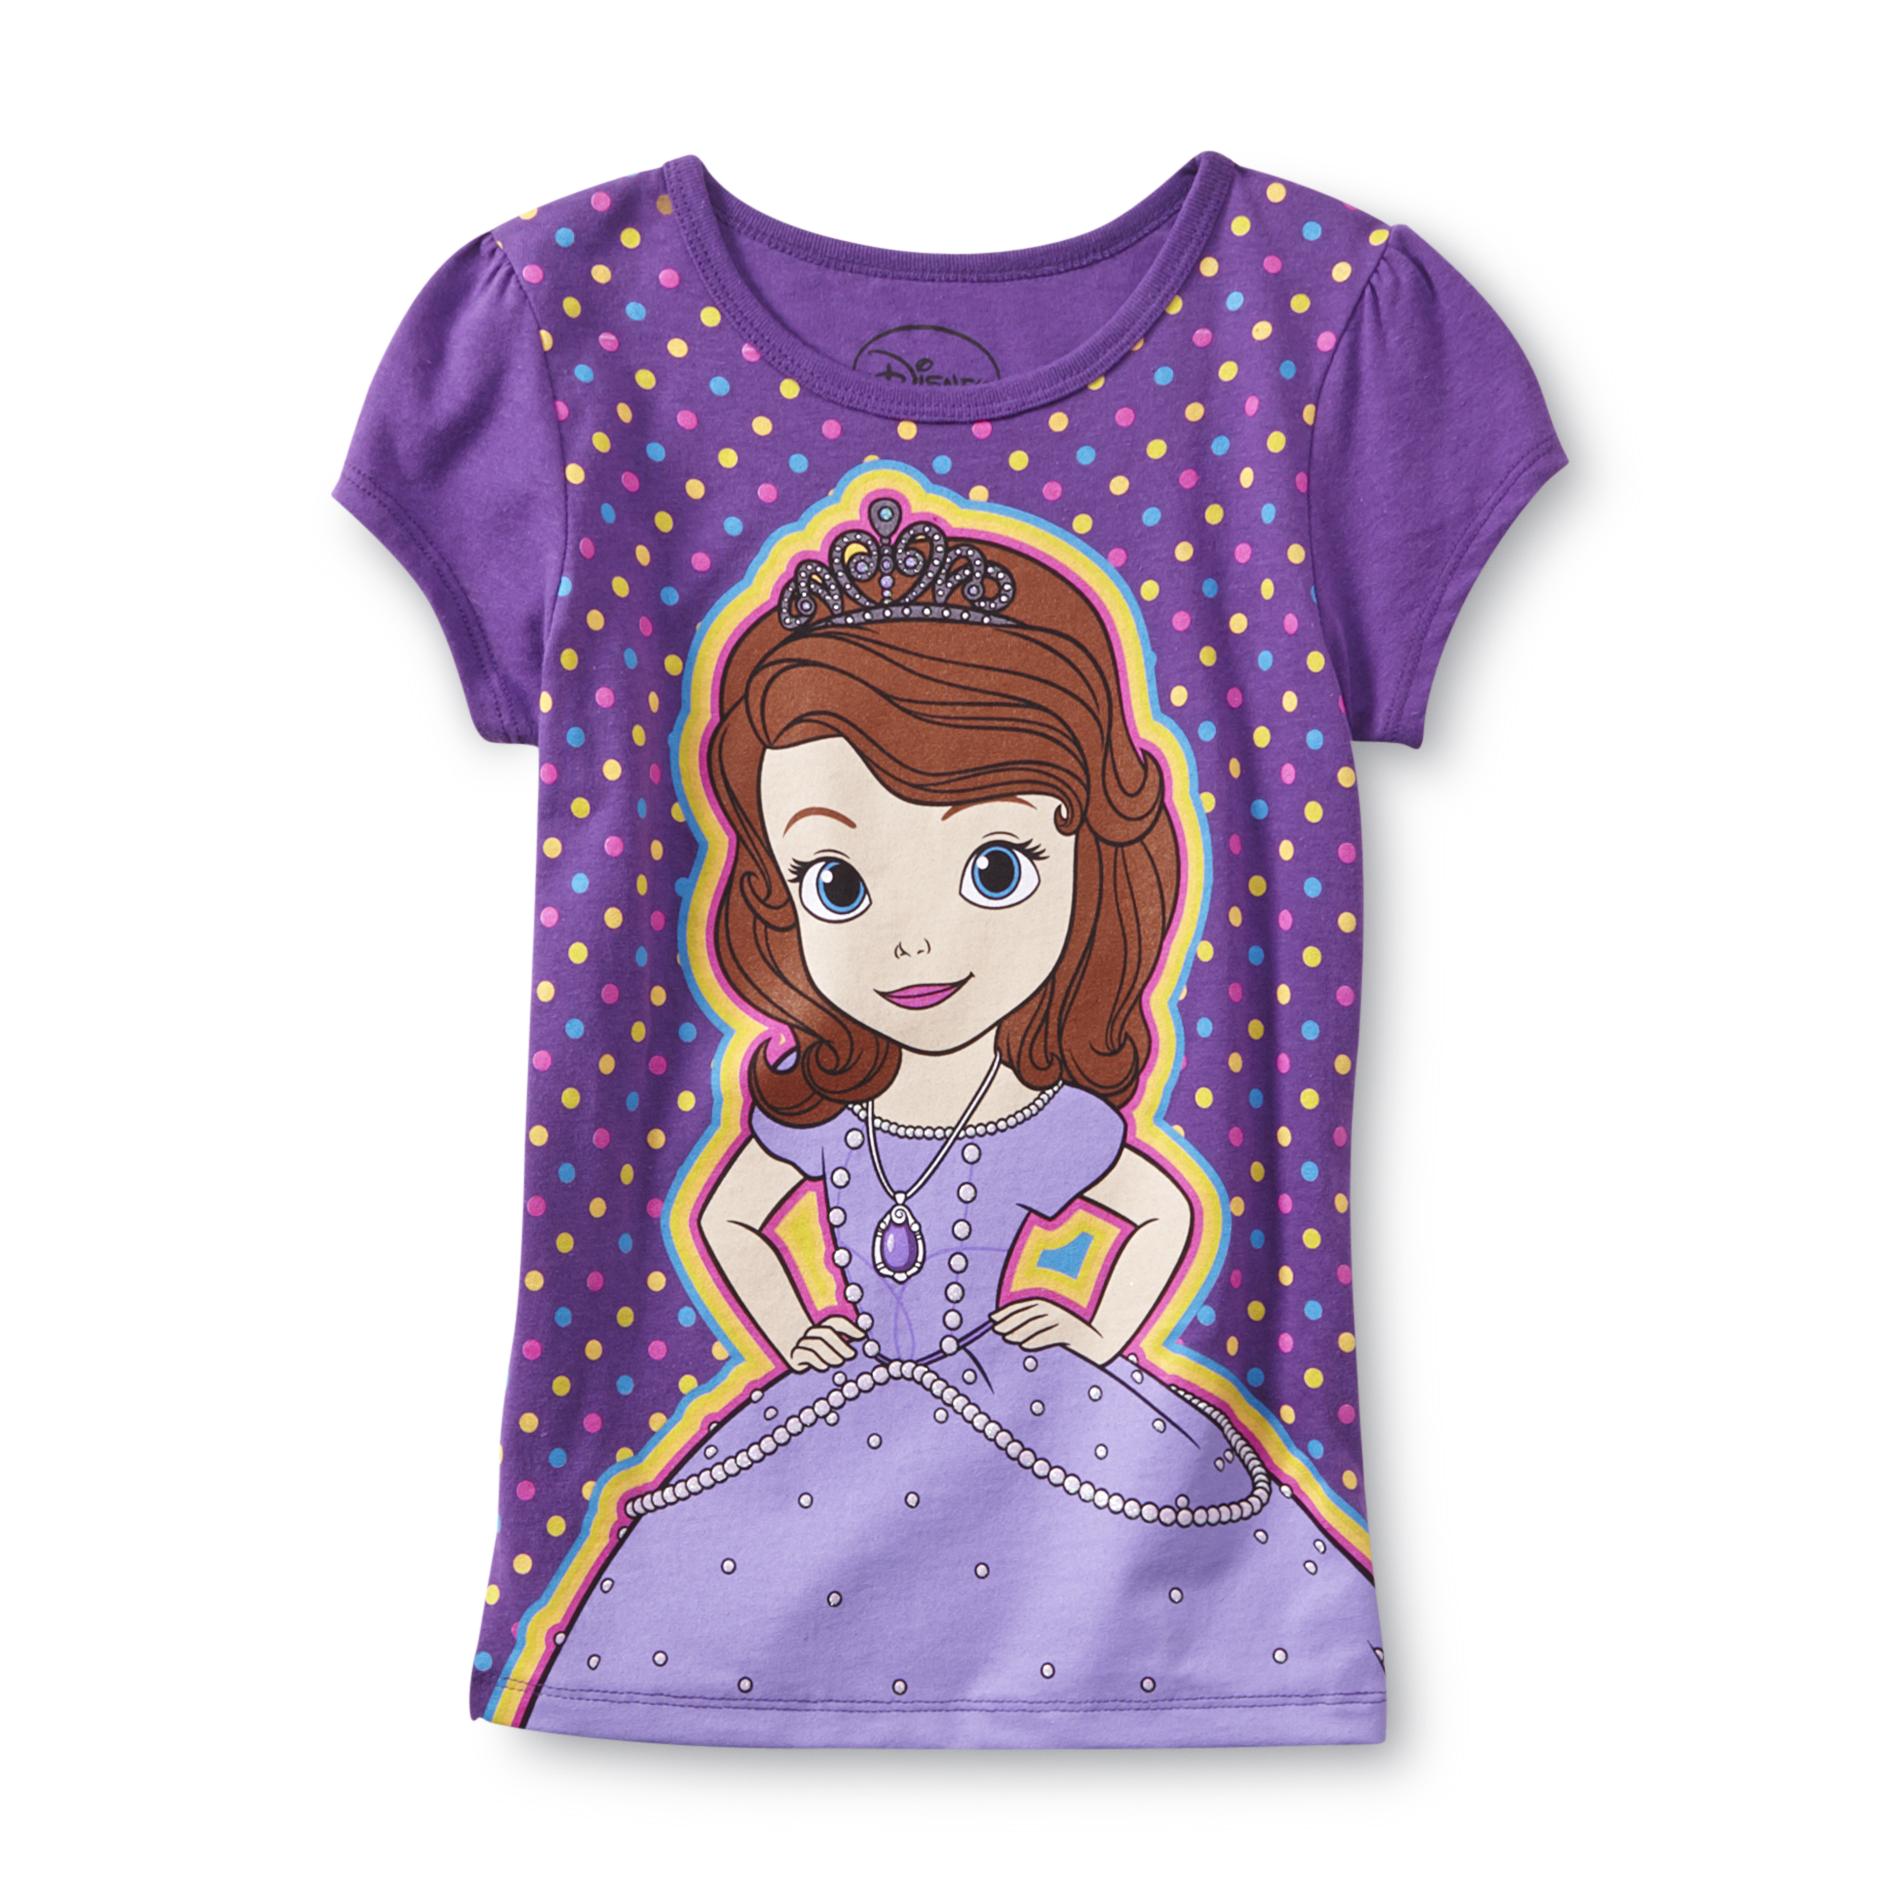 Disney Sofia the First Girl's Graphic T-Shirt - Polka Dot